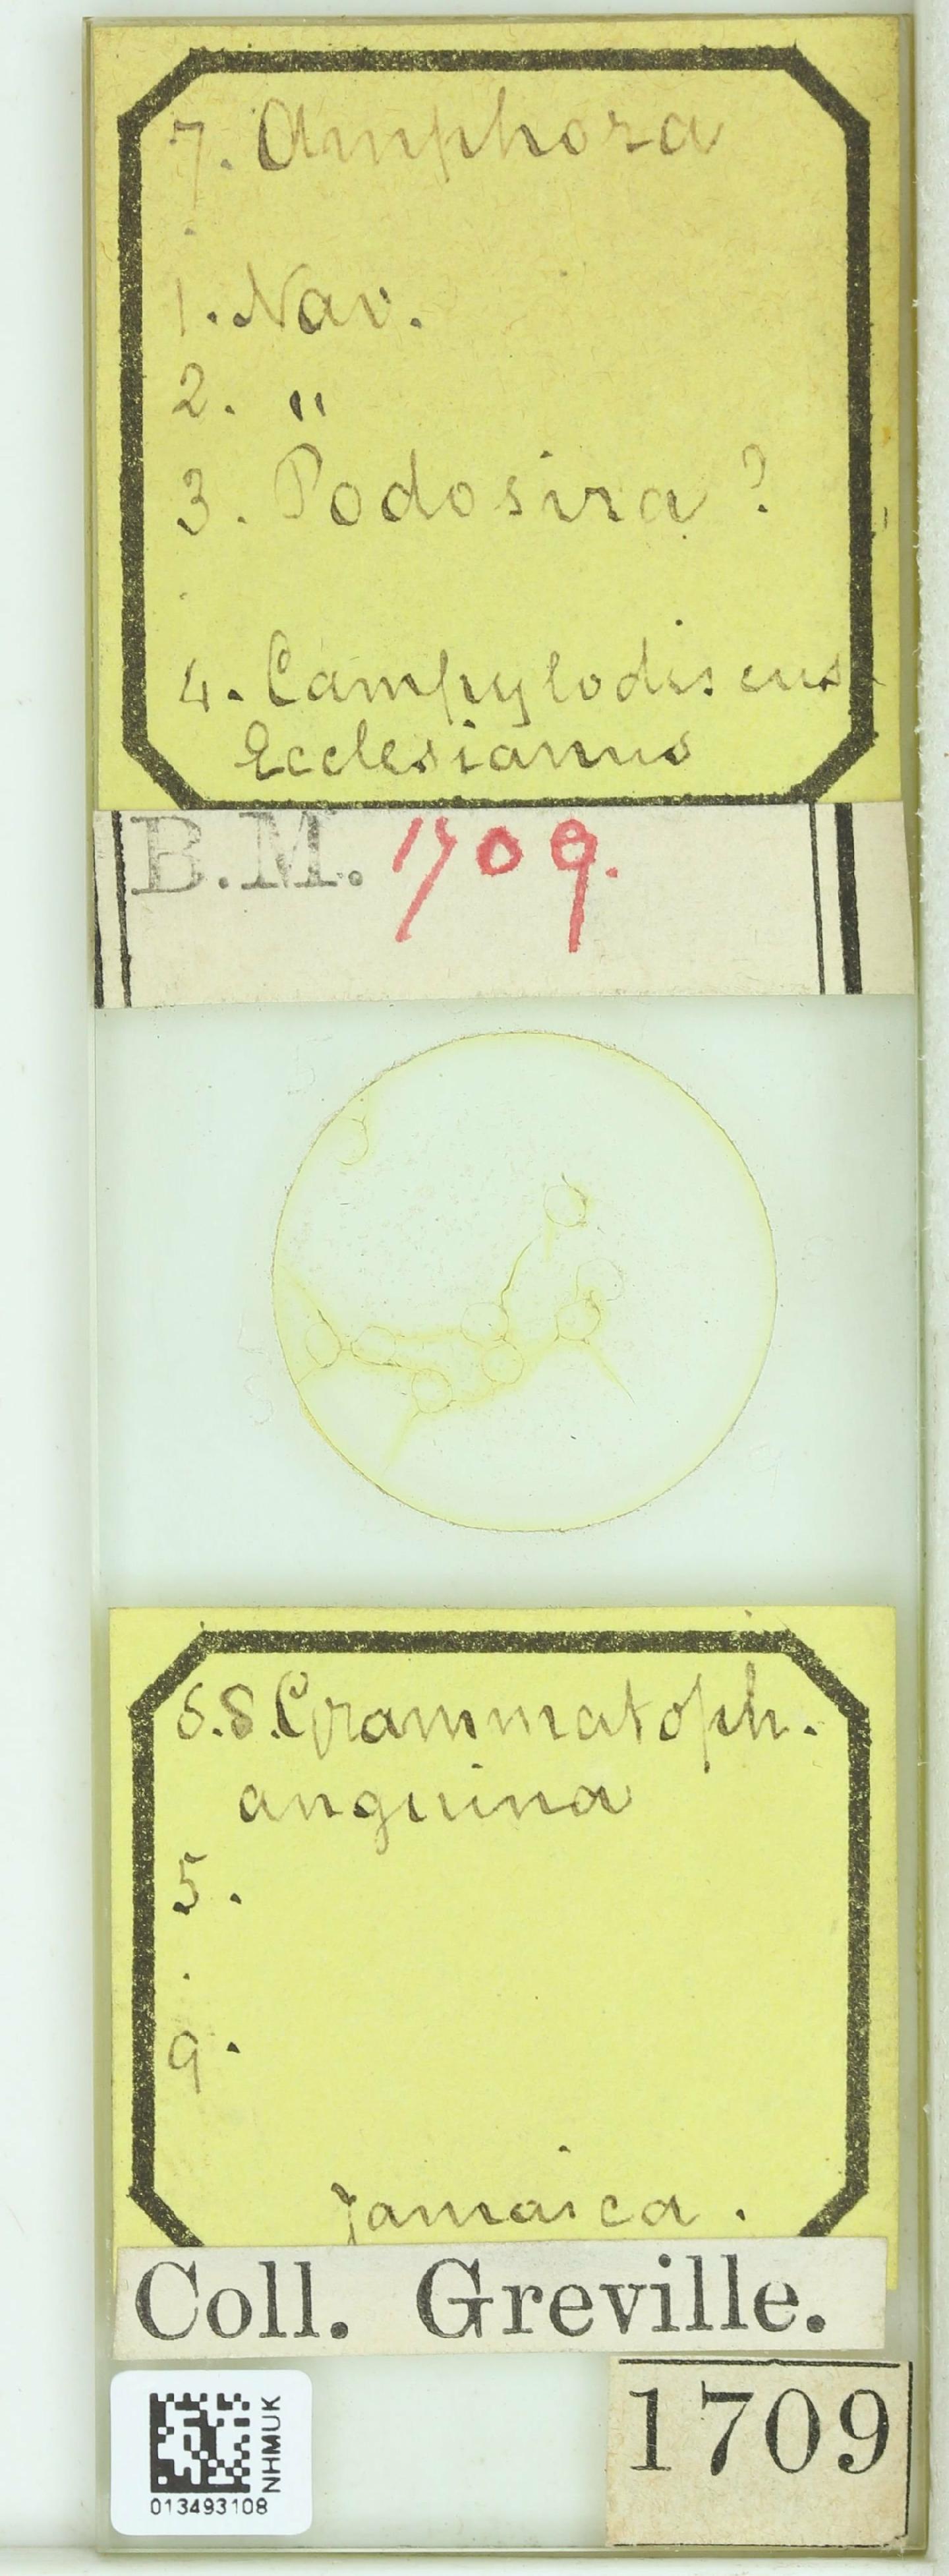 To NHMUK collection (Campylodiscus ecclesianus Grev.; NHMUK:ecatalogue:4734325)